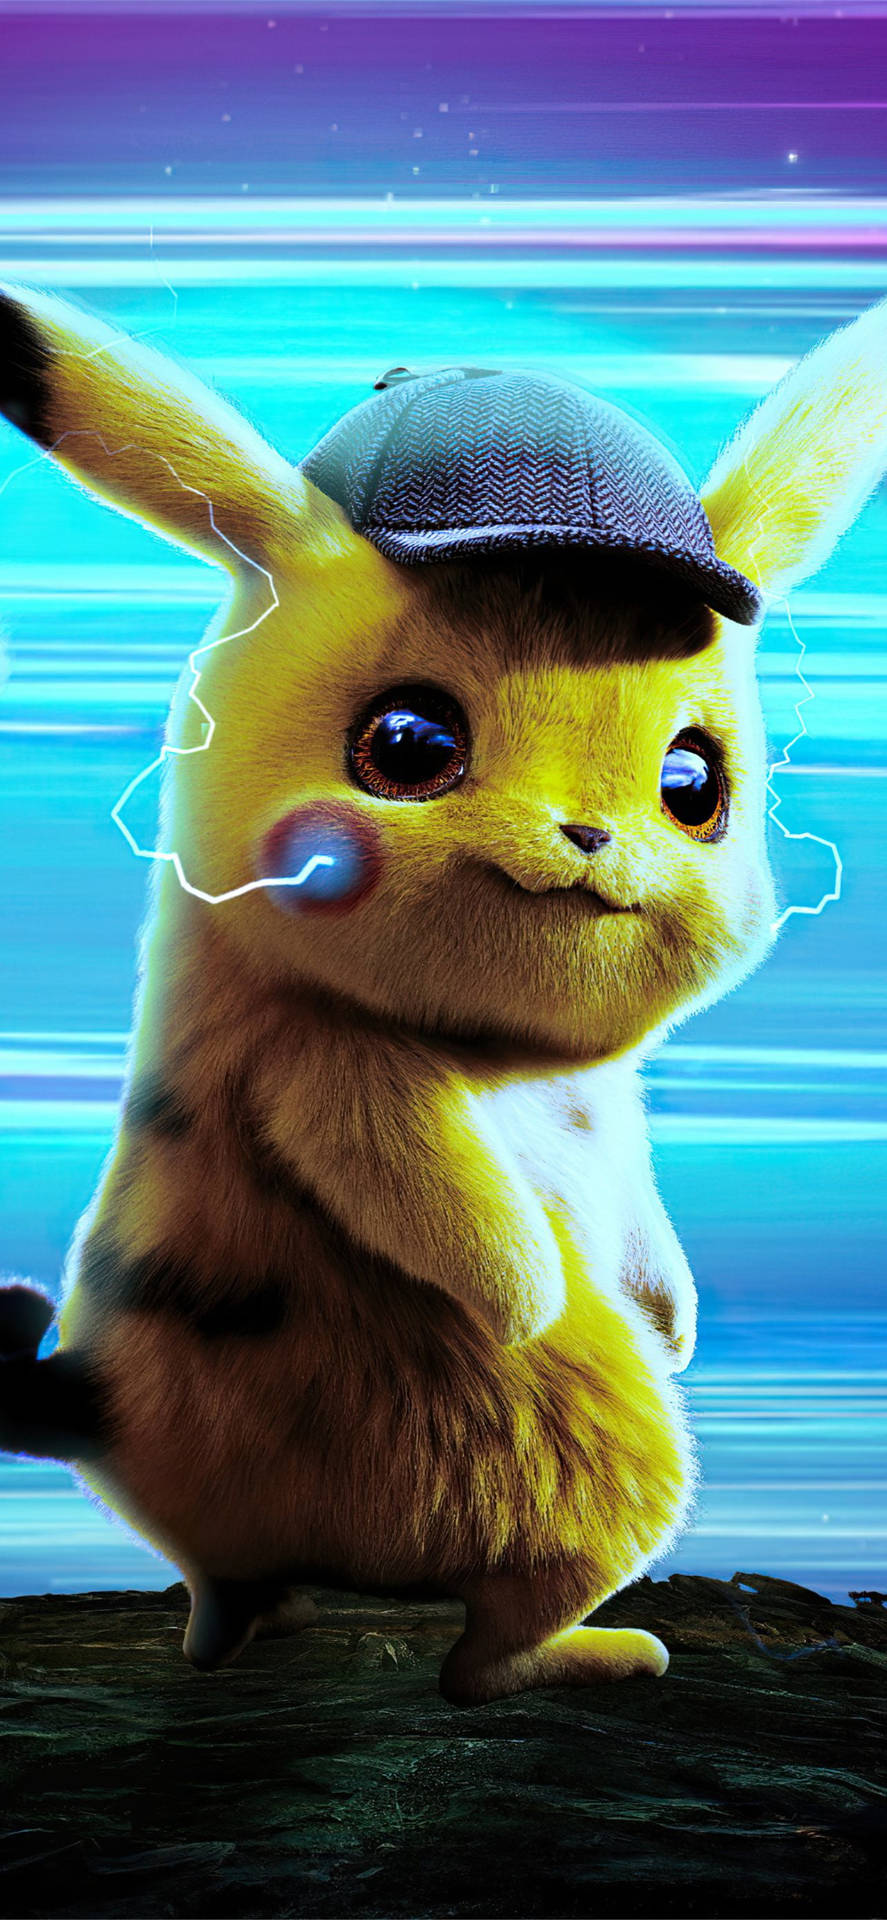 Free Detective Pikachu Wallpaper Downloads, [100+] Detective Pikachu  Wallpapers for FREE 